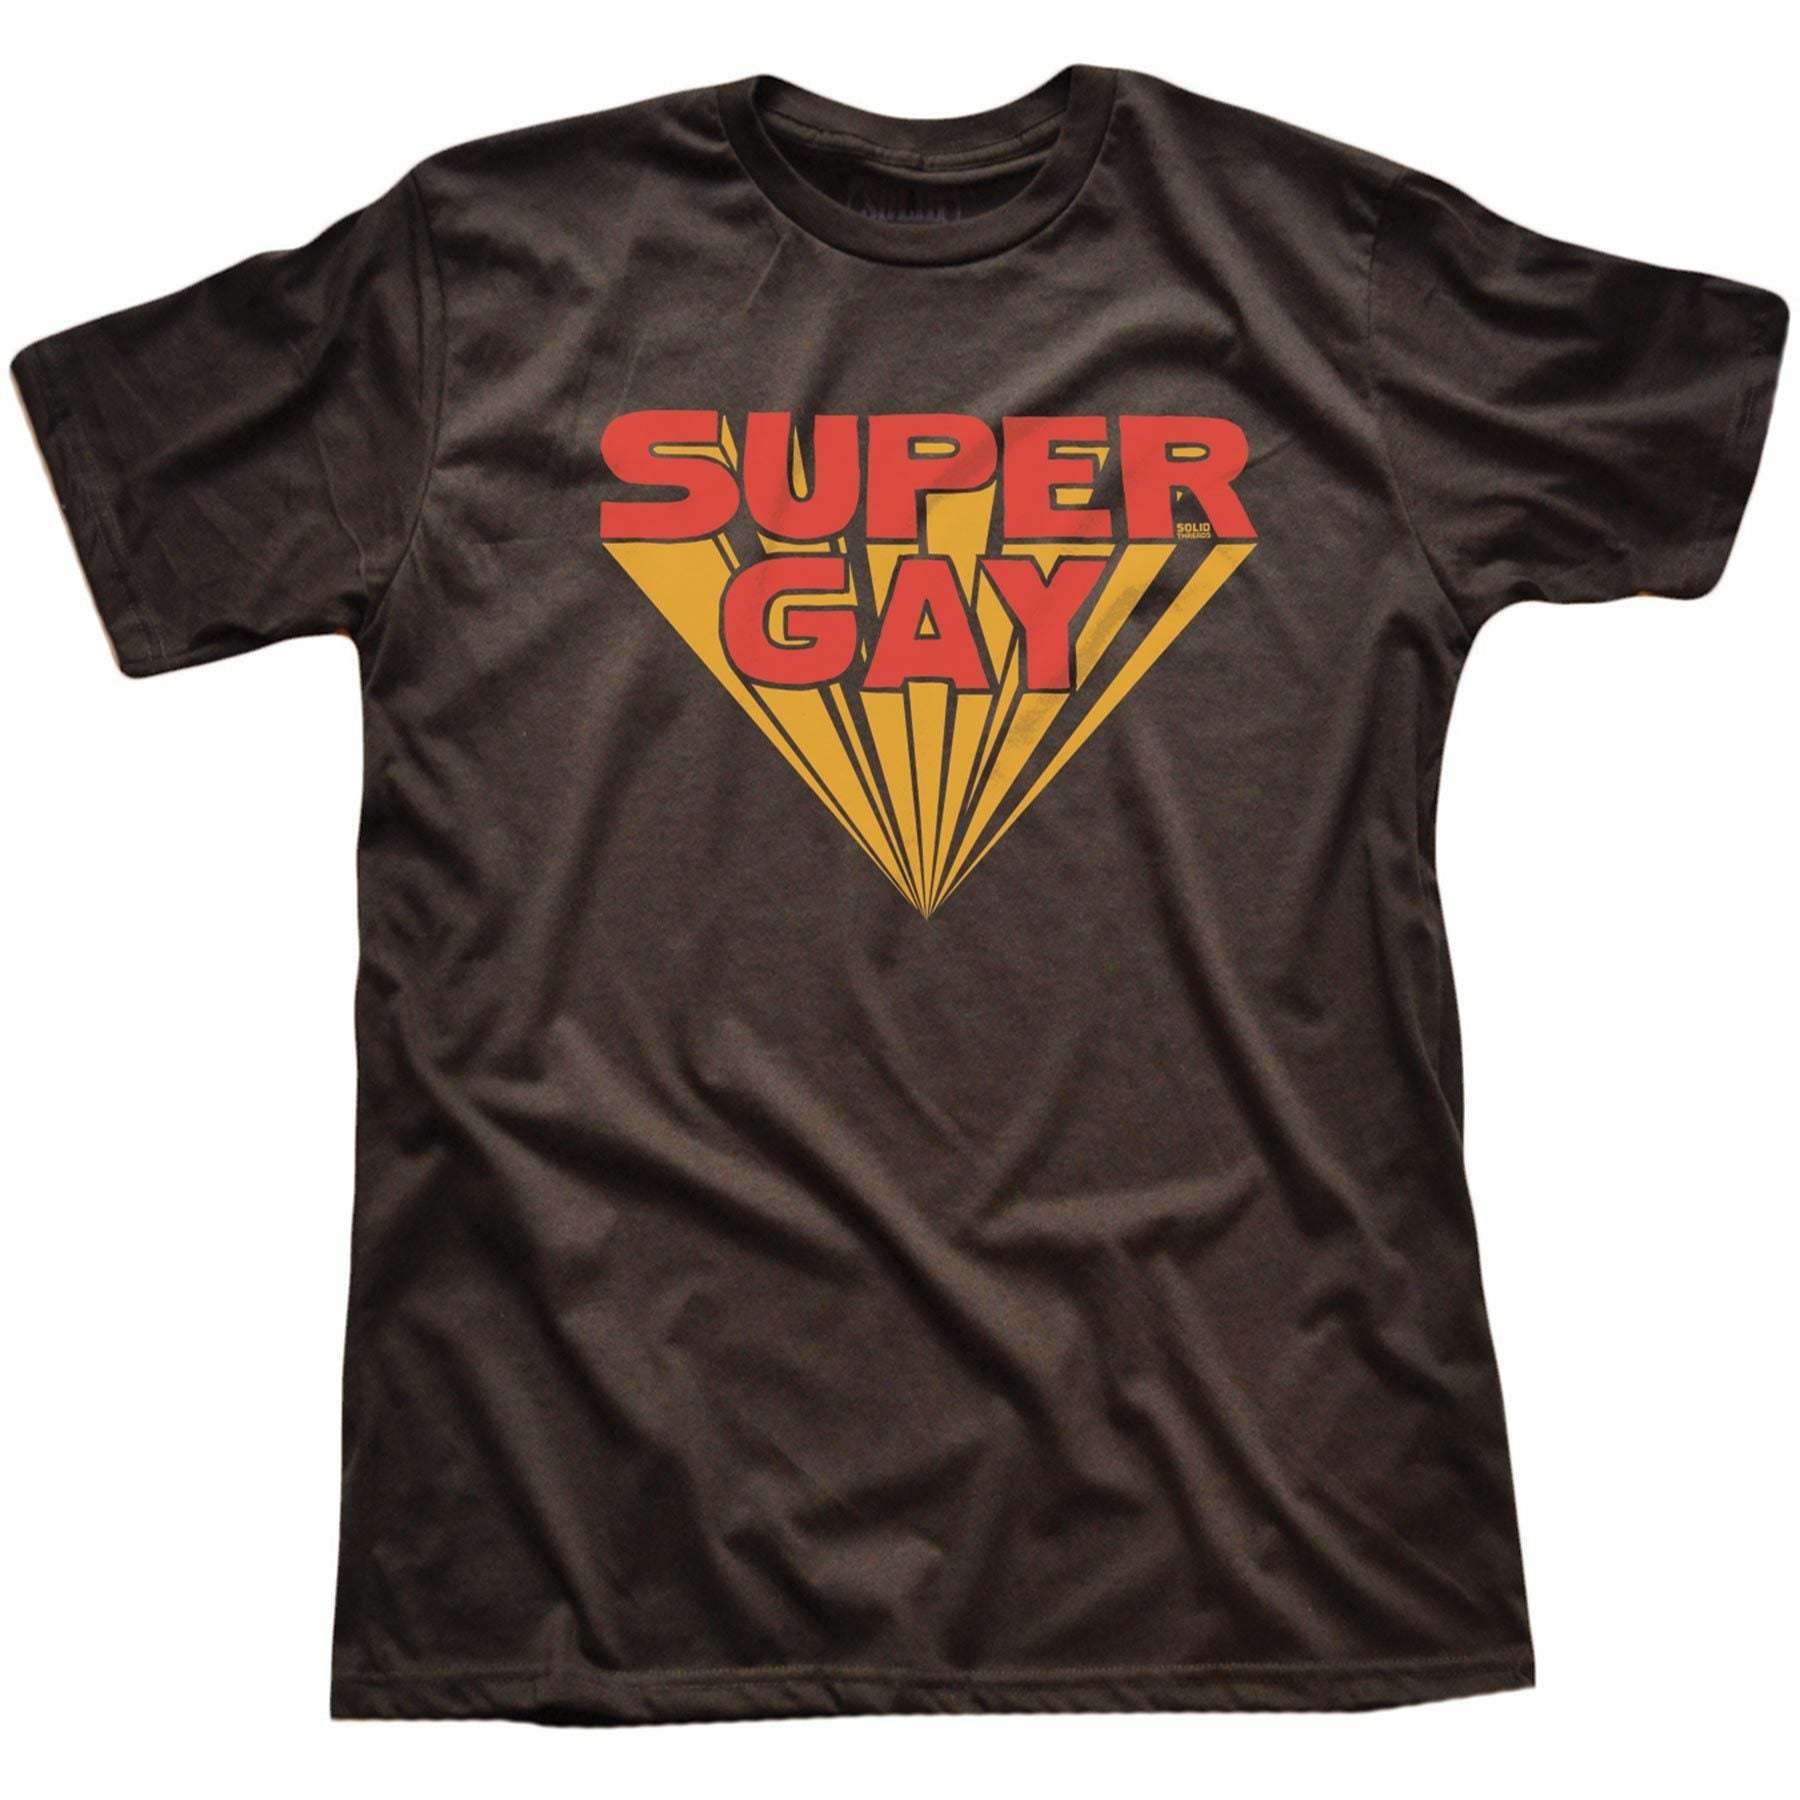 Men's Super Gay Funny Blackwash Graphic T-Shirt | Vintage LGBTQ Pride Tee | Solid Threads